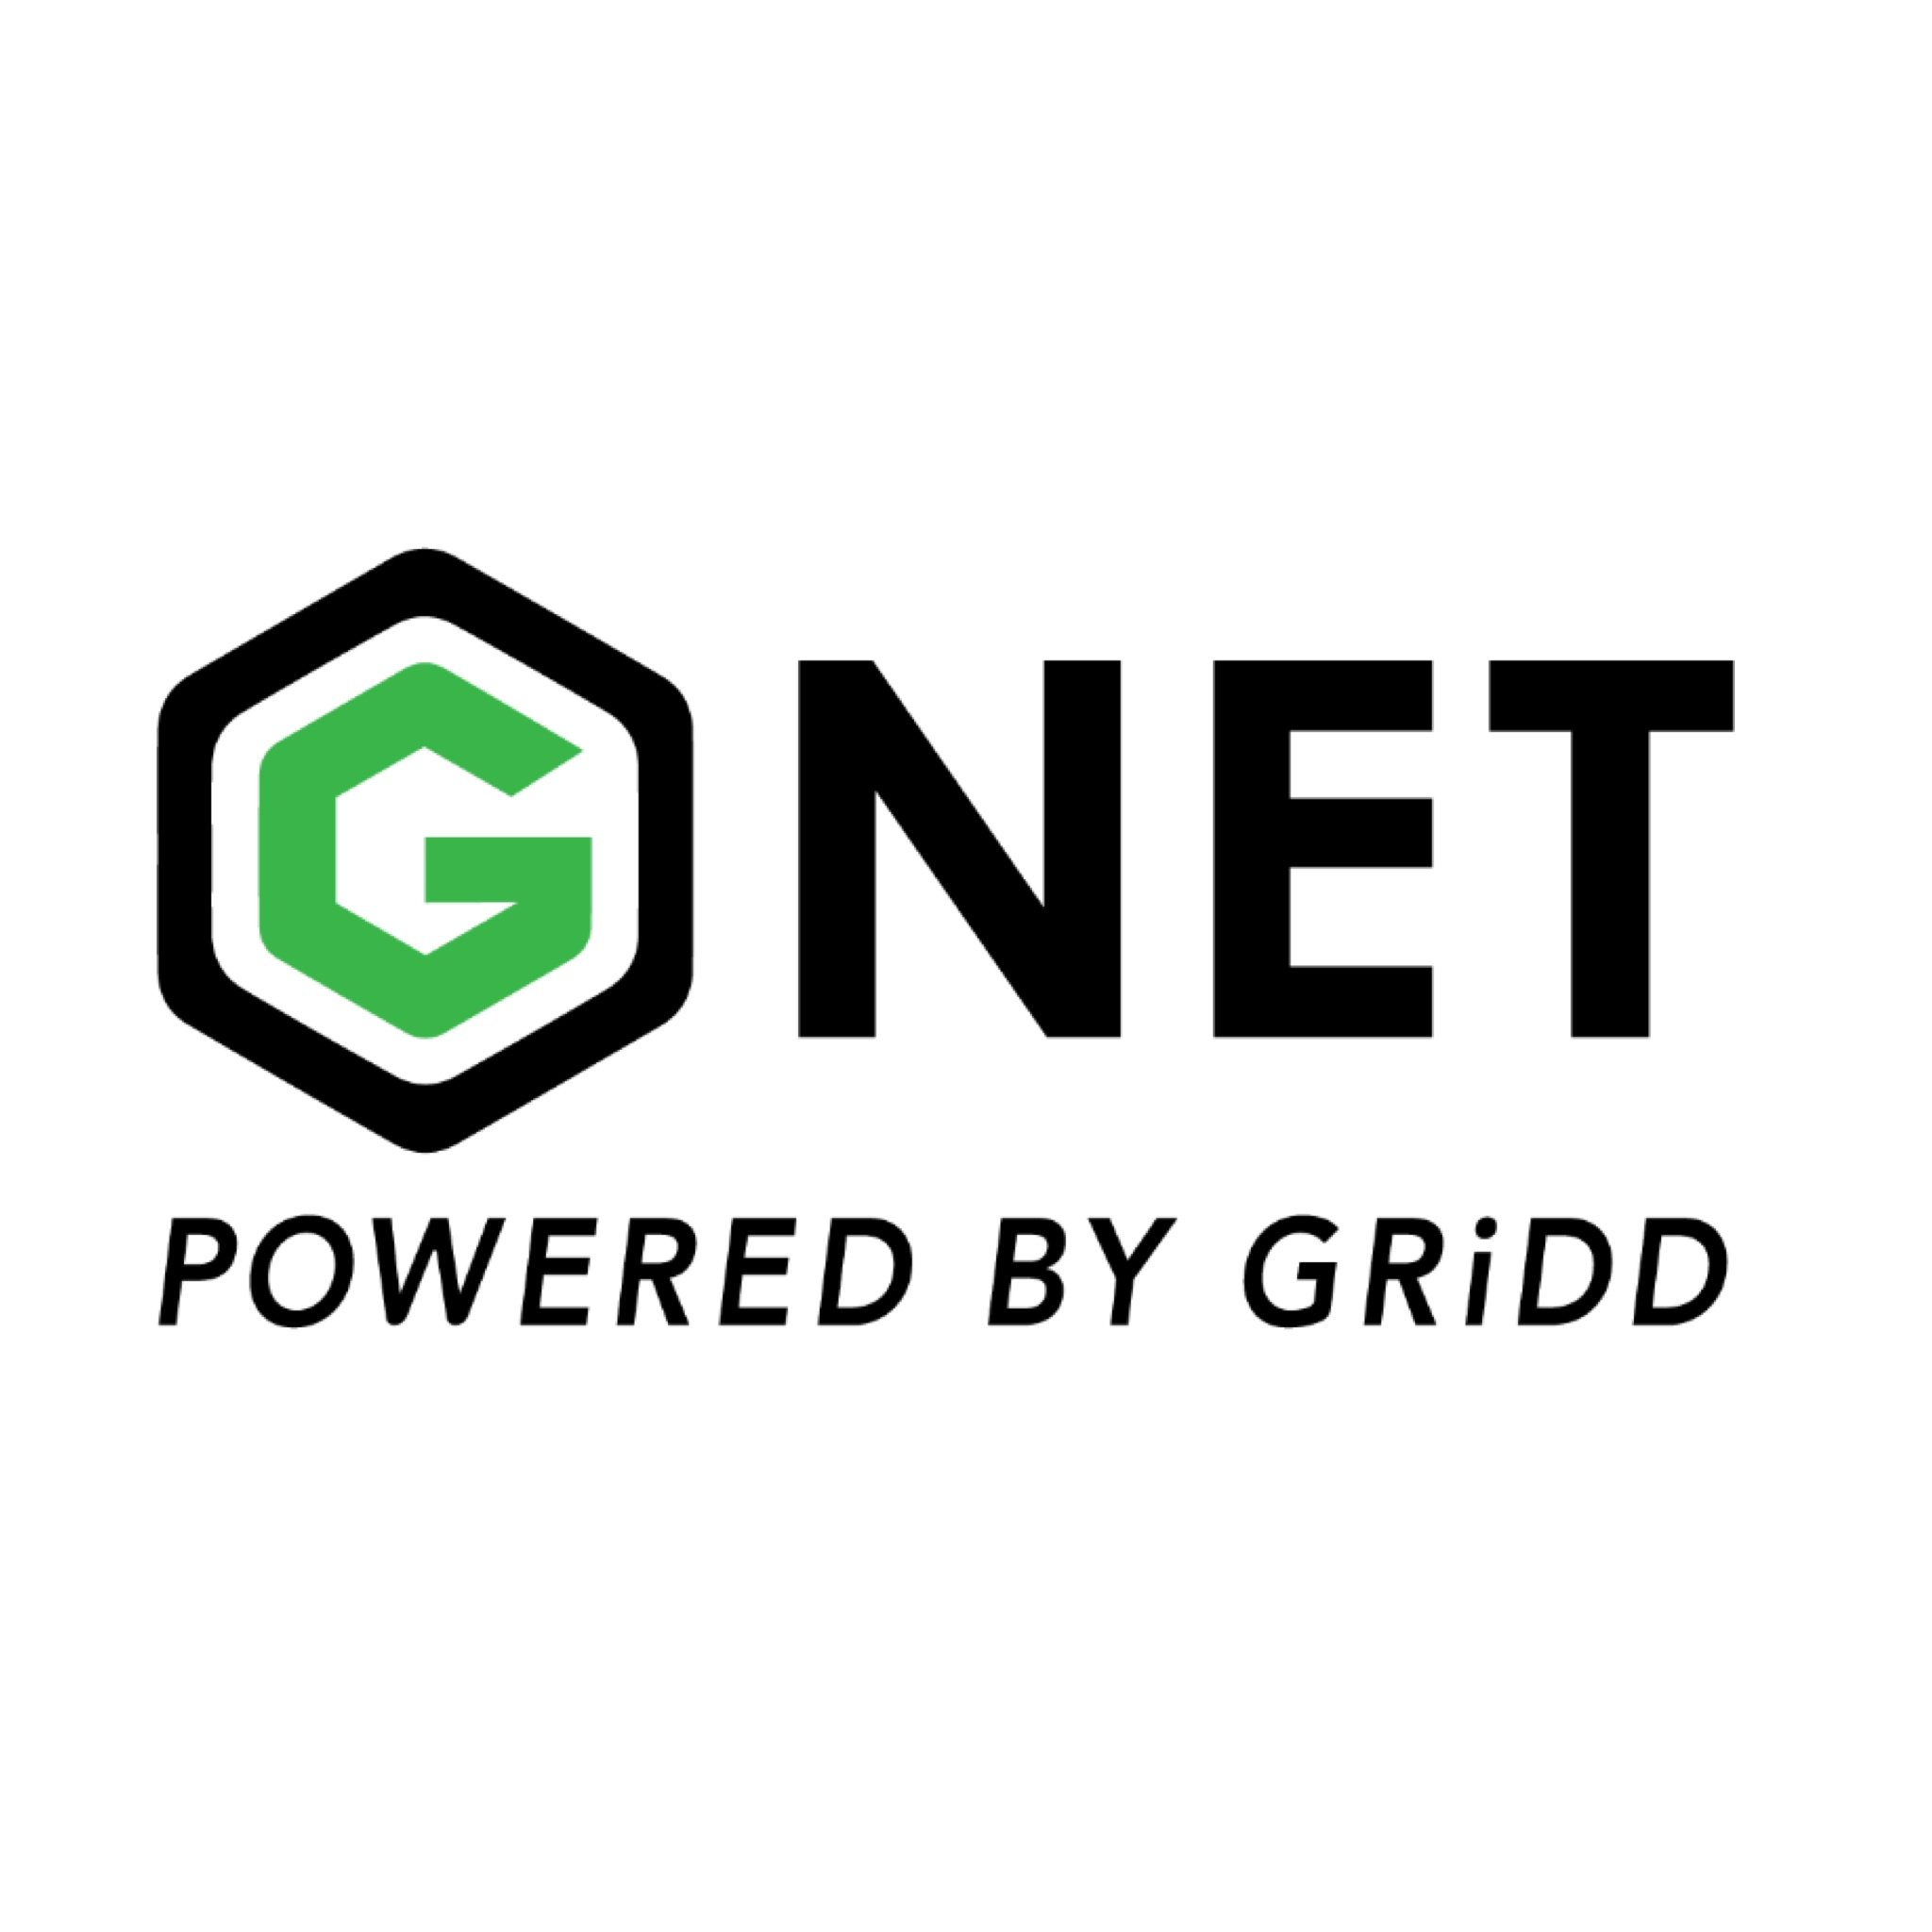 Gnet Powered by gridd logo.JPG